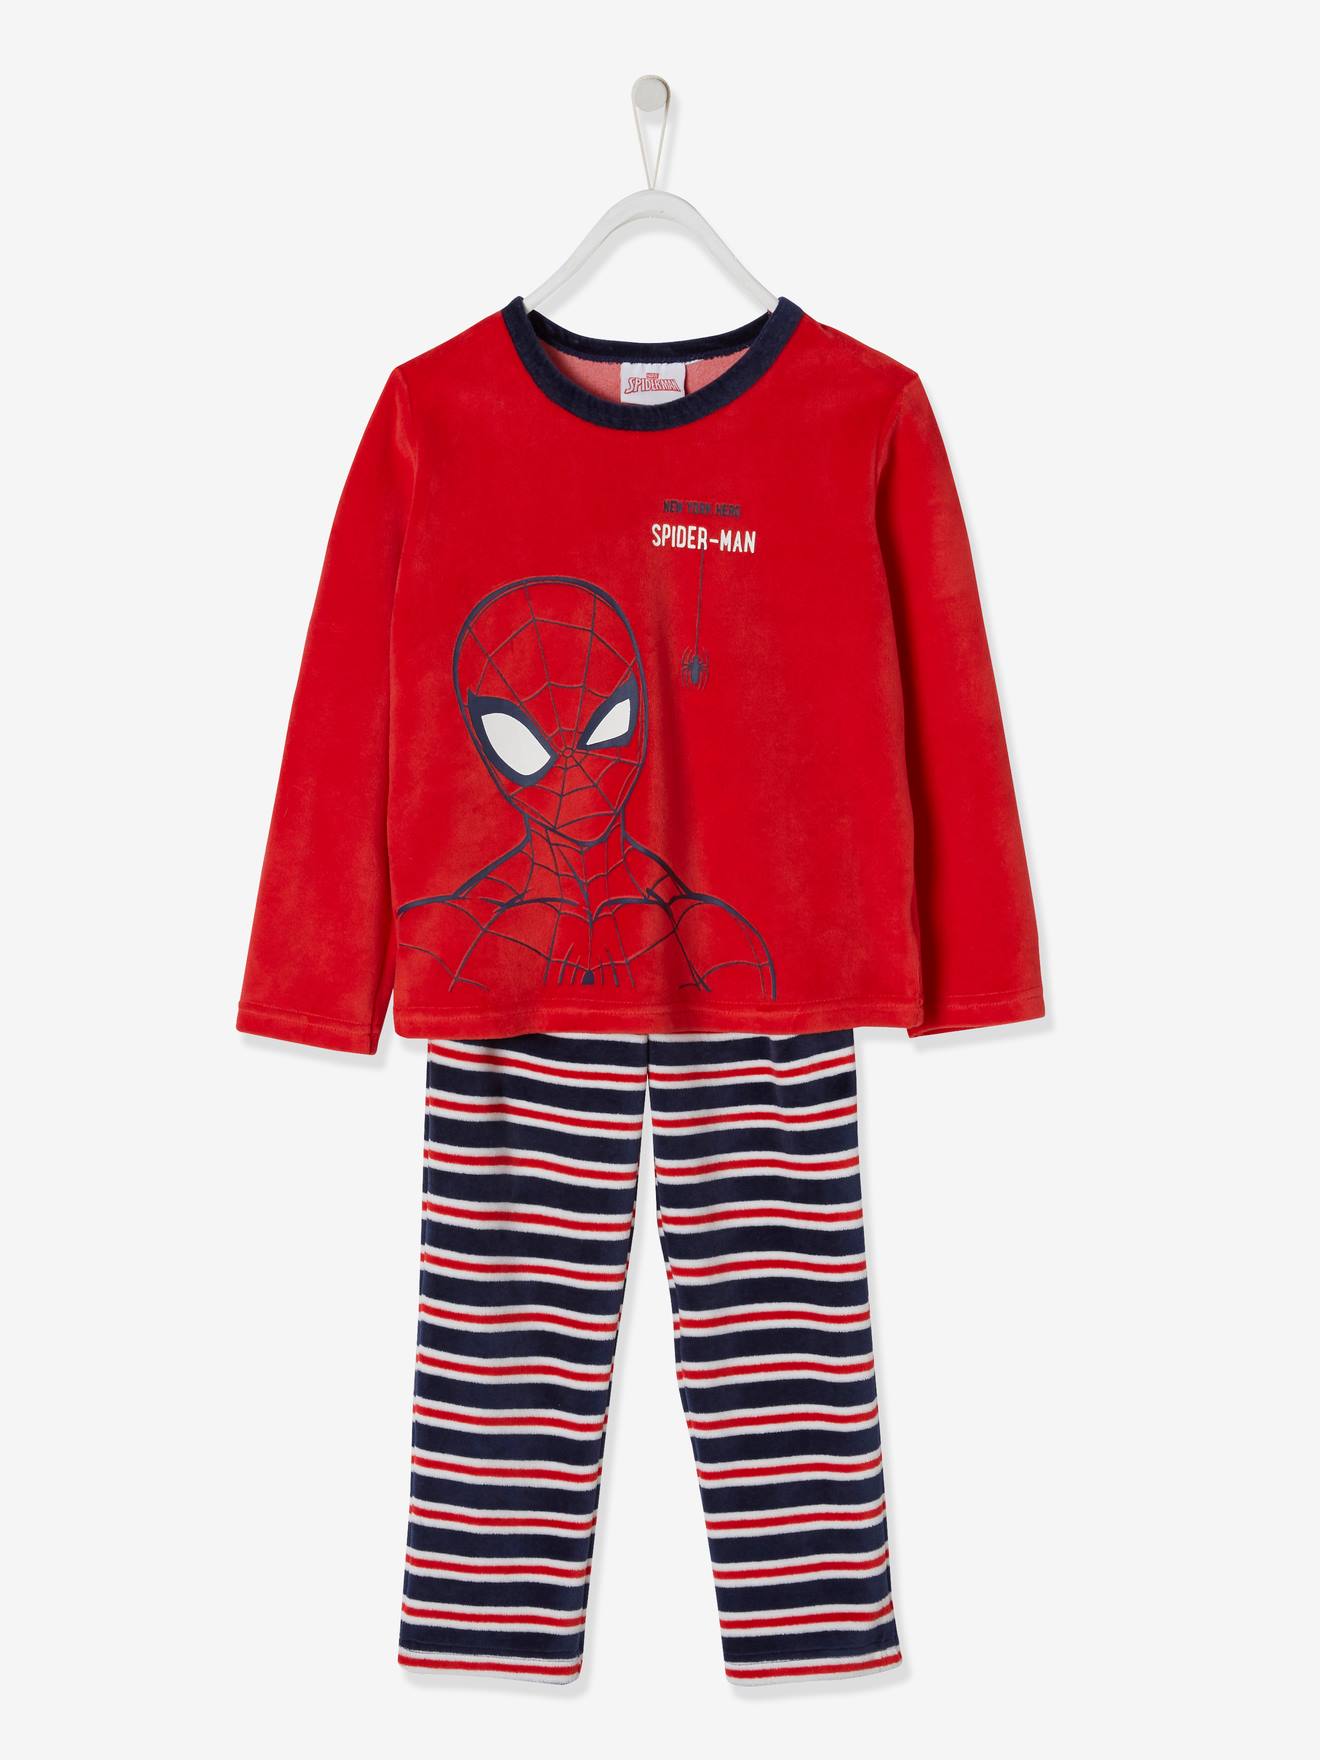 Visiter la boutique MarvelMarvel Spiderman Pyjamas Boys Enfants Bleu Coton Short Coton PJS Nightwear 